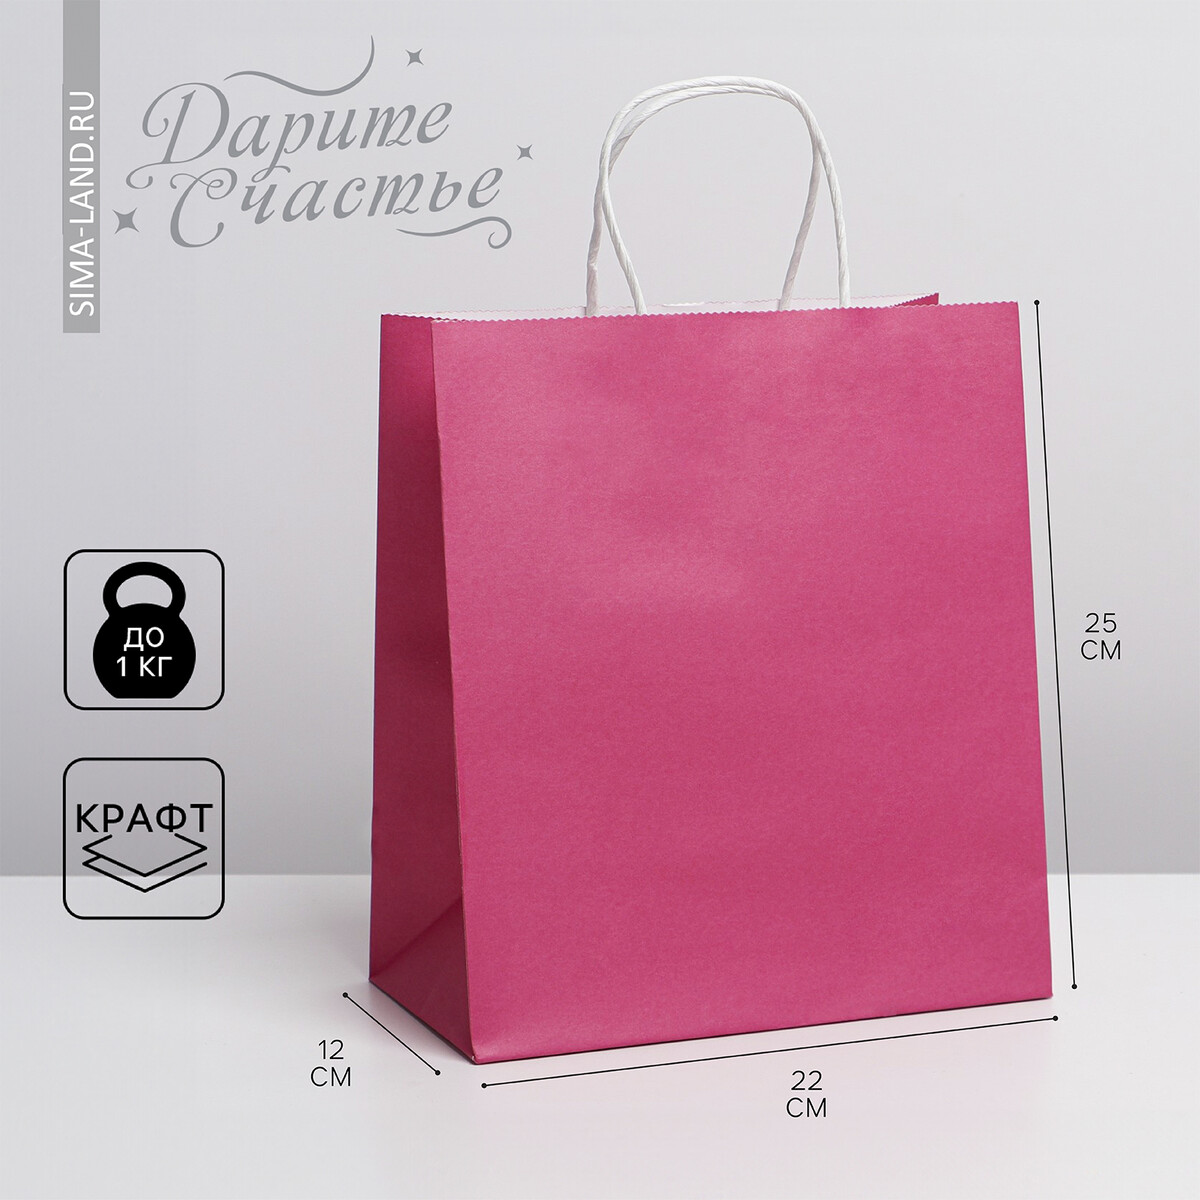 Пакет подарочный крафтовый, упаковка, pink, 22 х 25 х 12 см подарочный пакет pink dreams а4